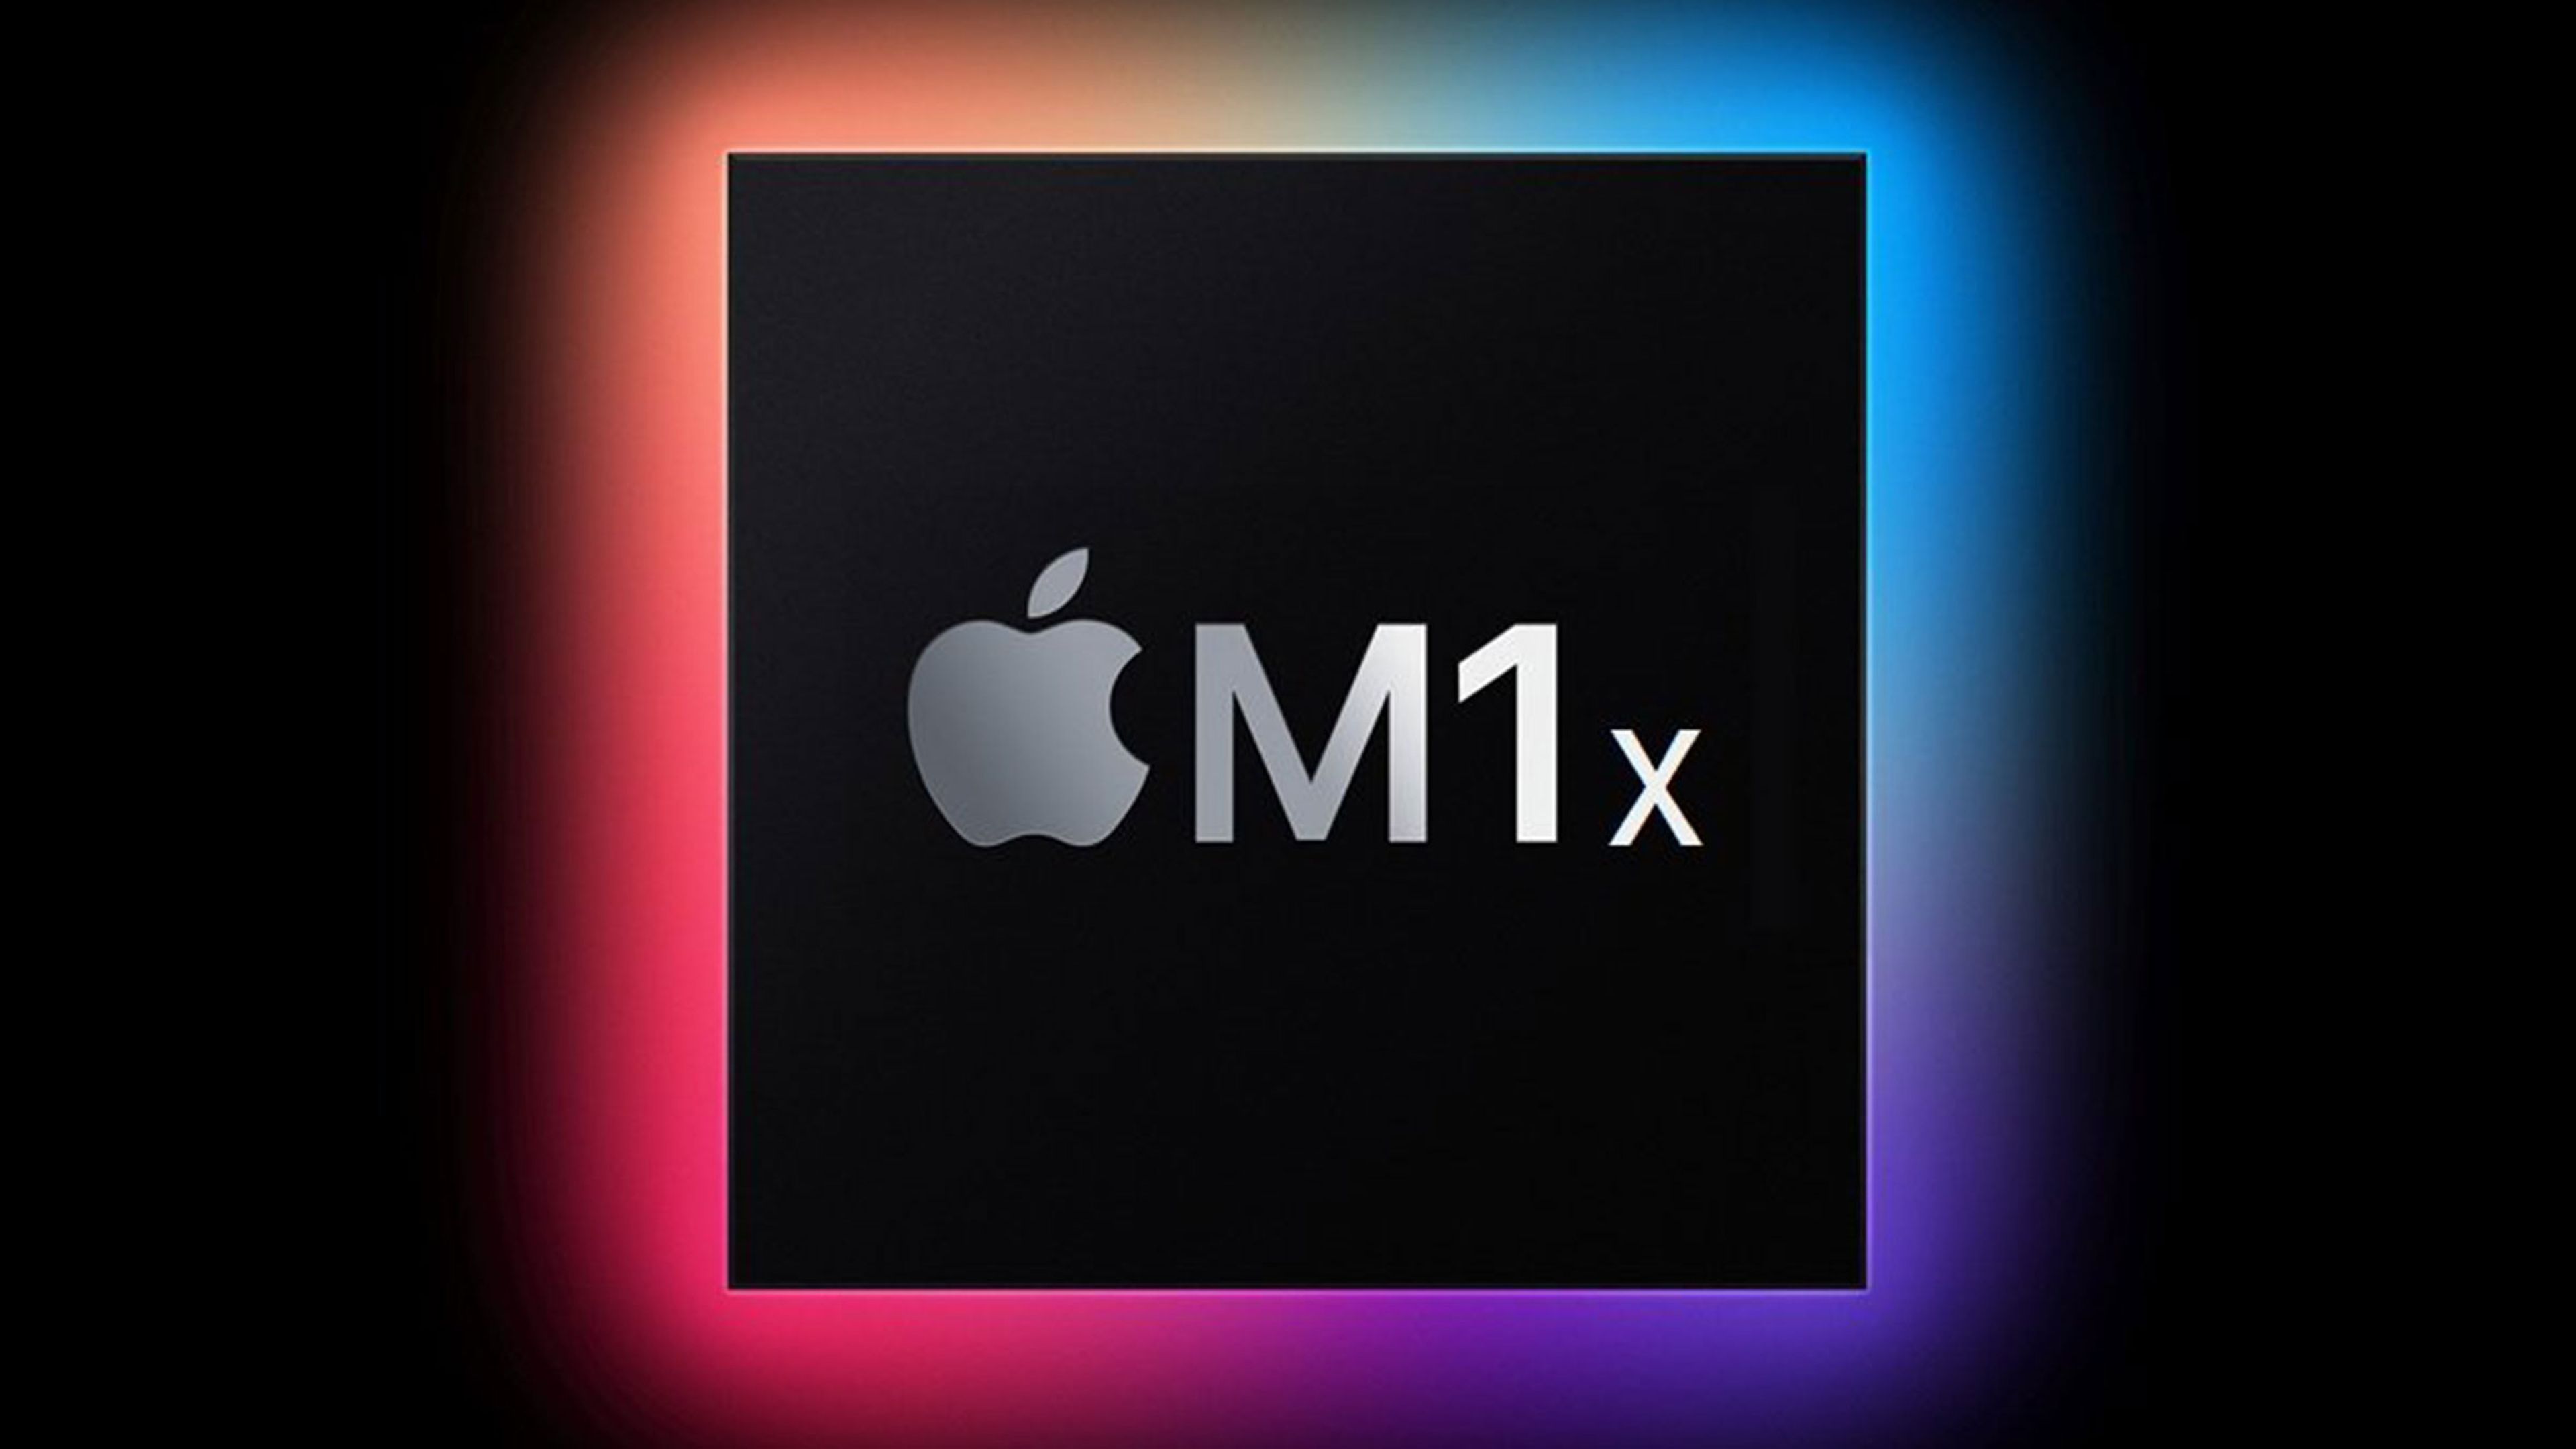 Apple M1X